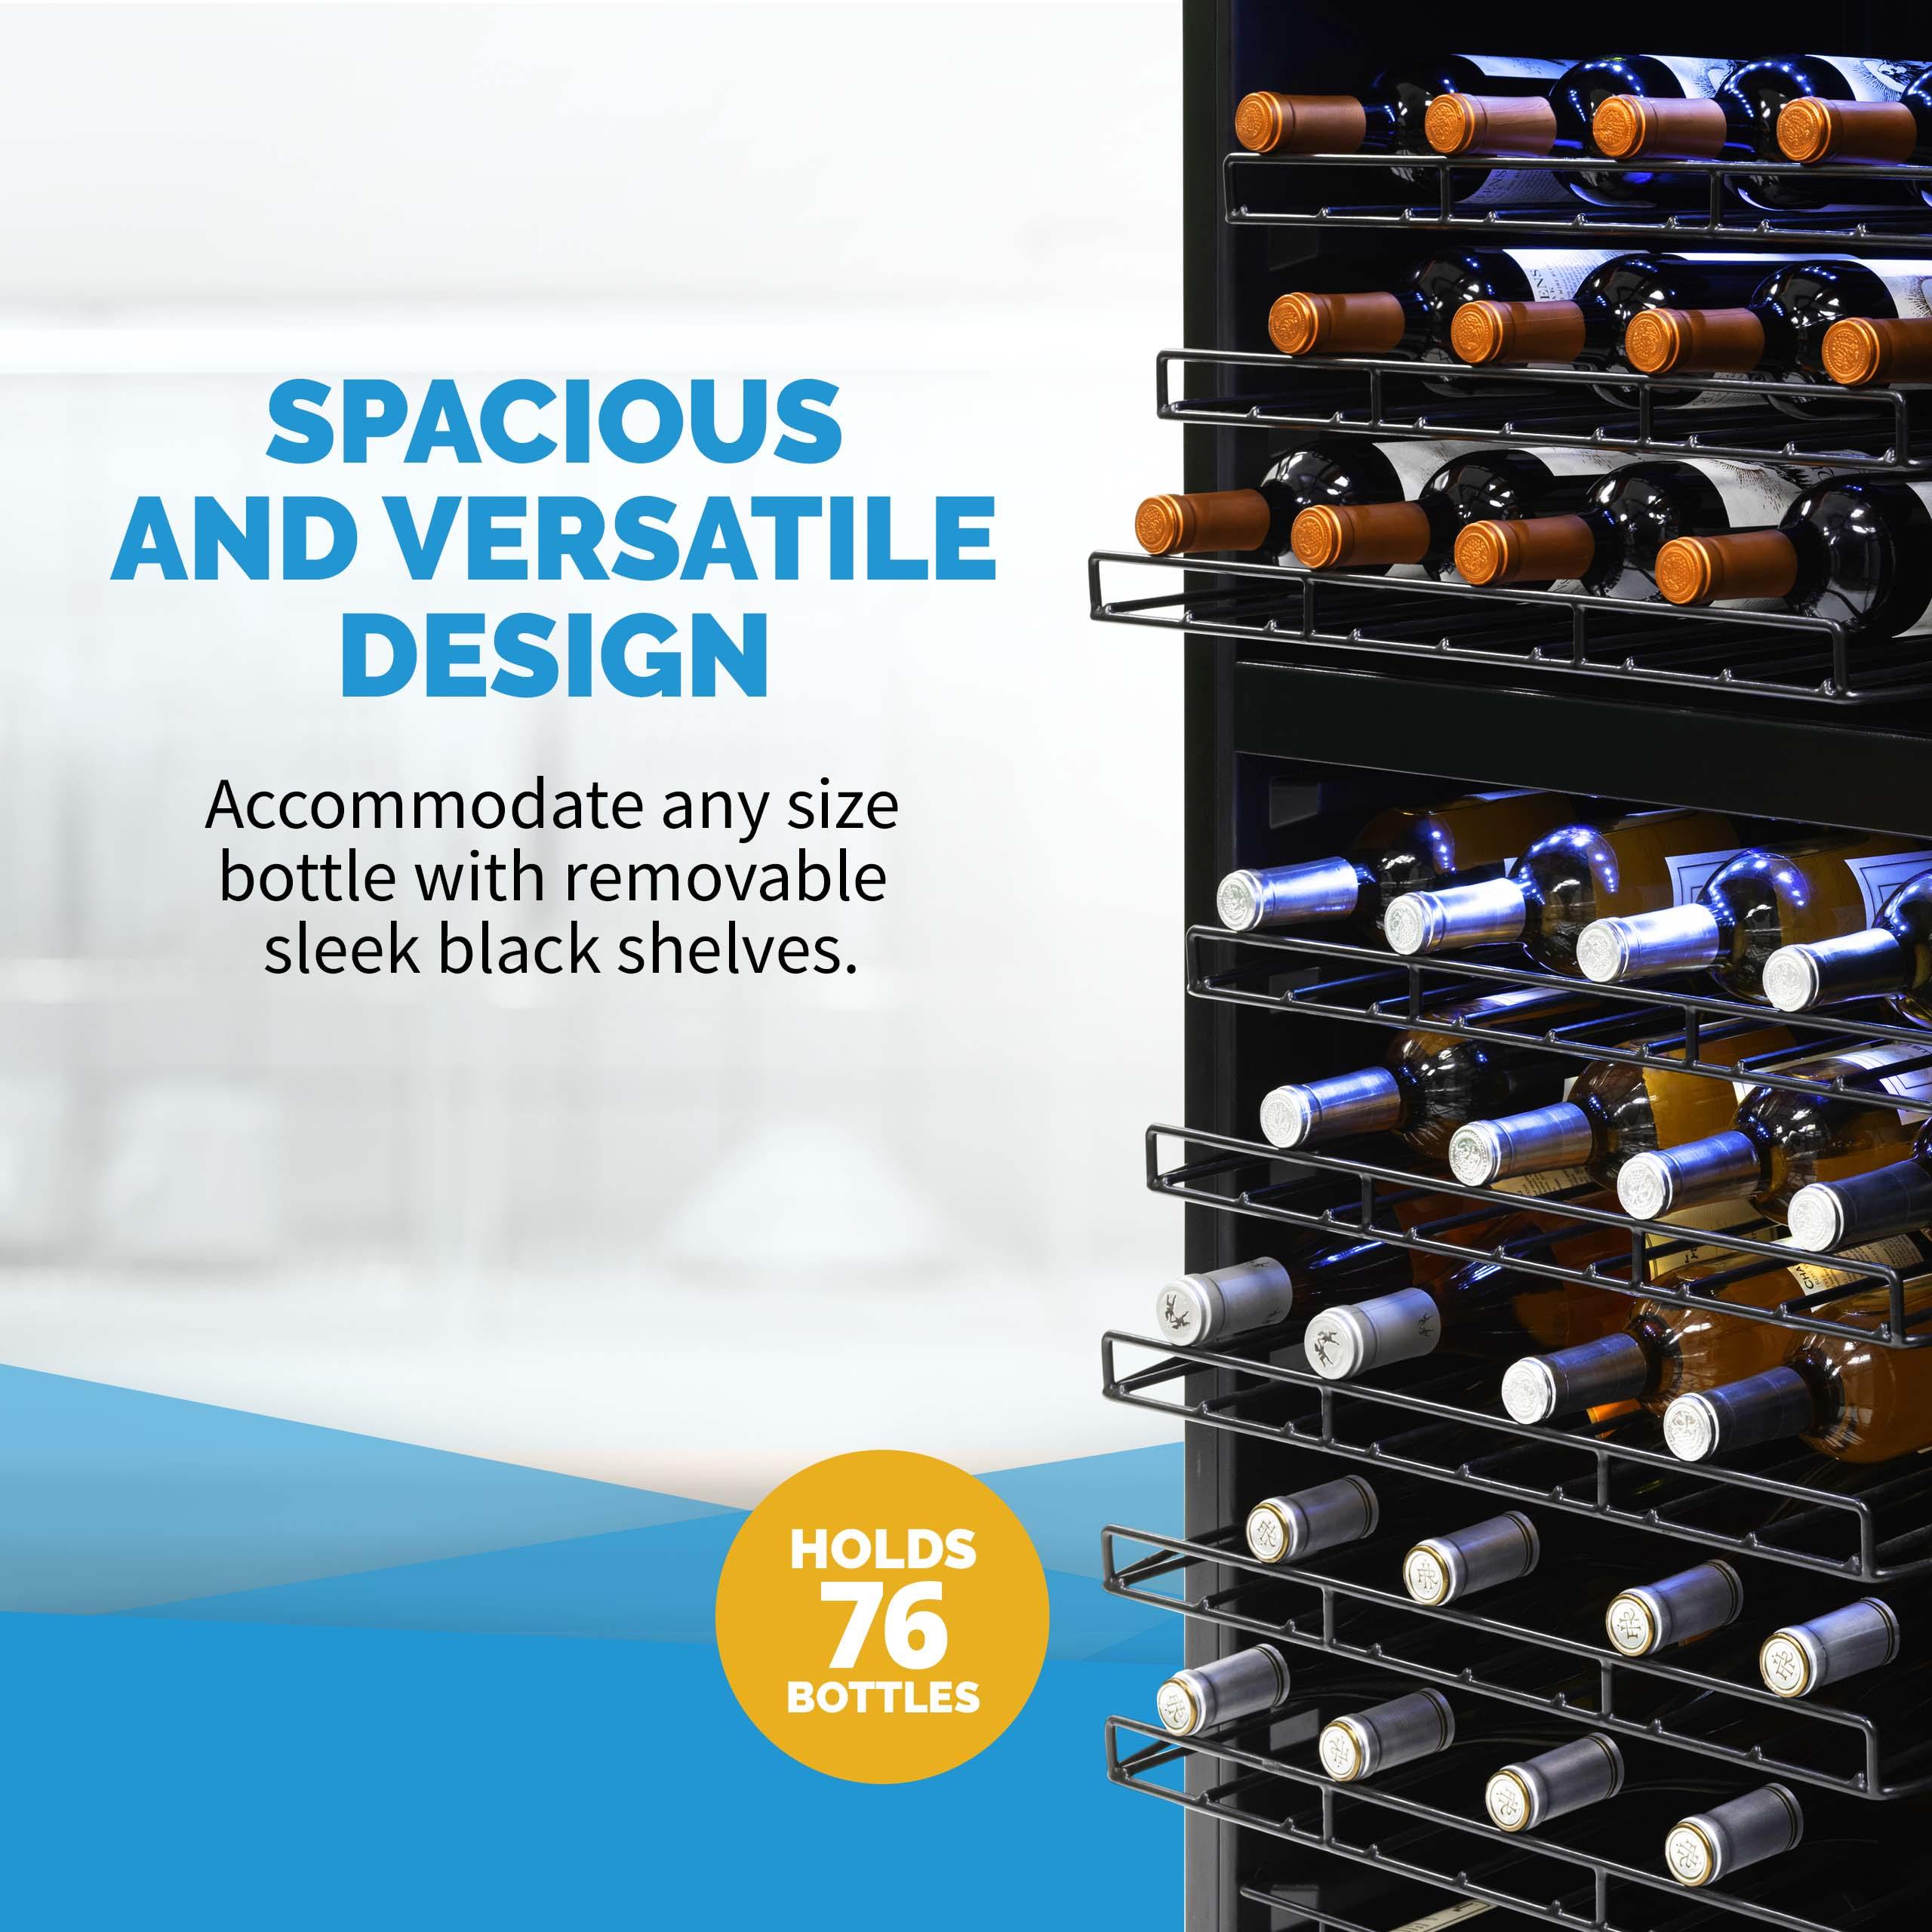 Newair - 76-Bottle Dual-Zone Freestanding Wine Cooler w/ Low-Vibration Ultra-Quiet Inverter Compressor (NWC076SS00)